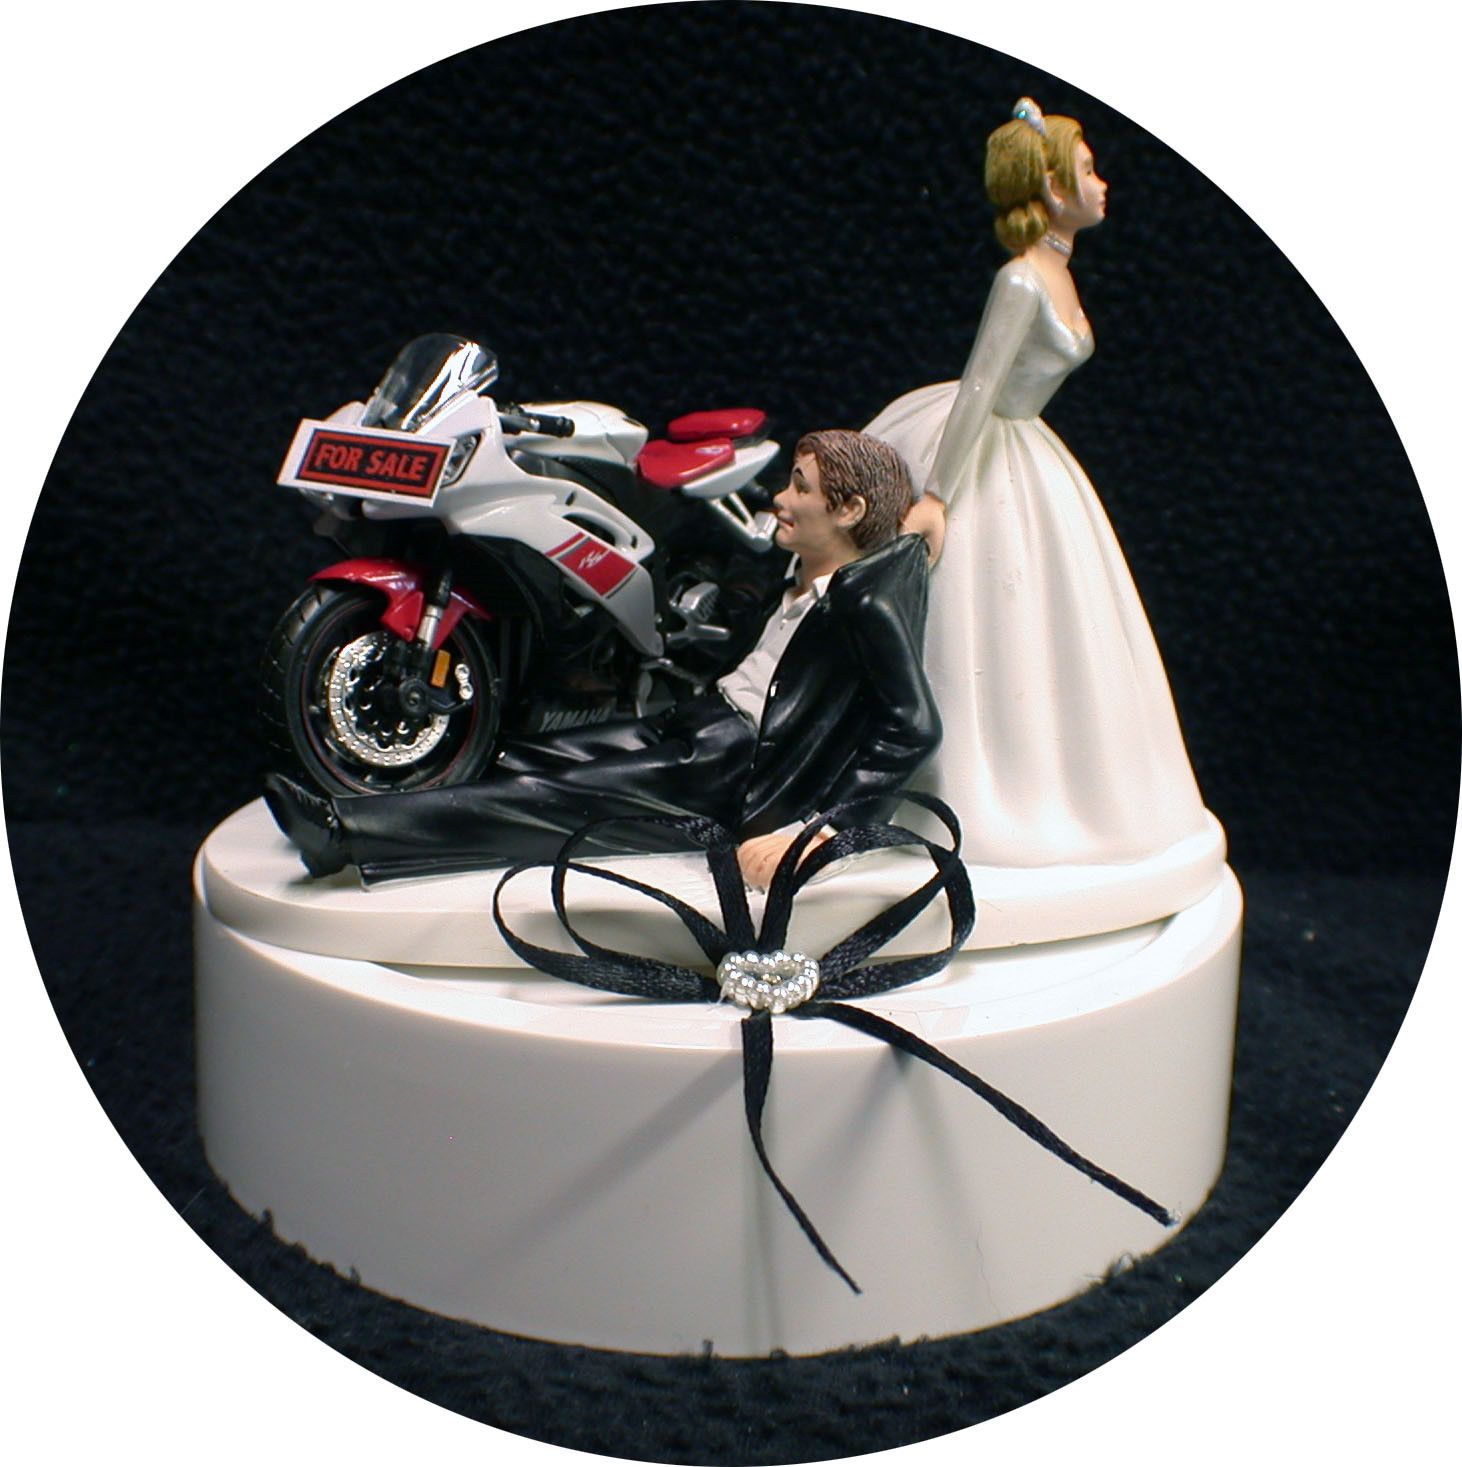 Hochzeitsfiguren torte motorrad.